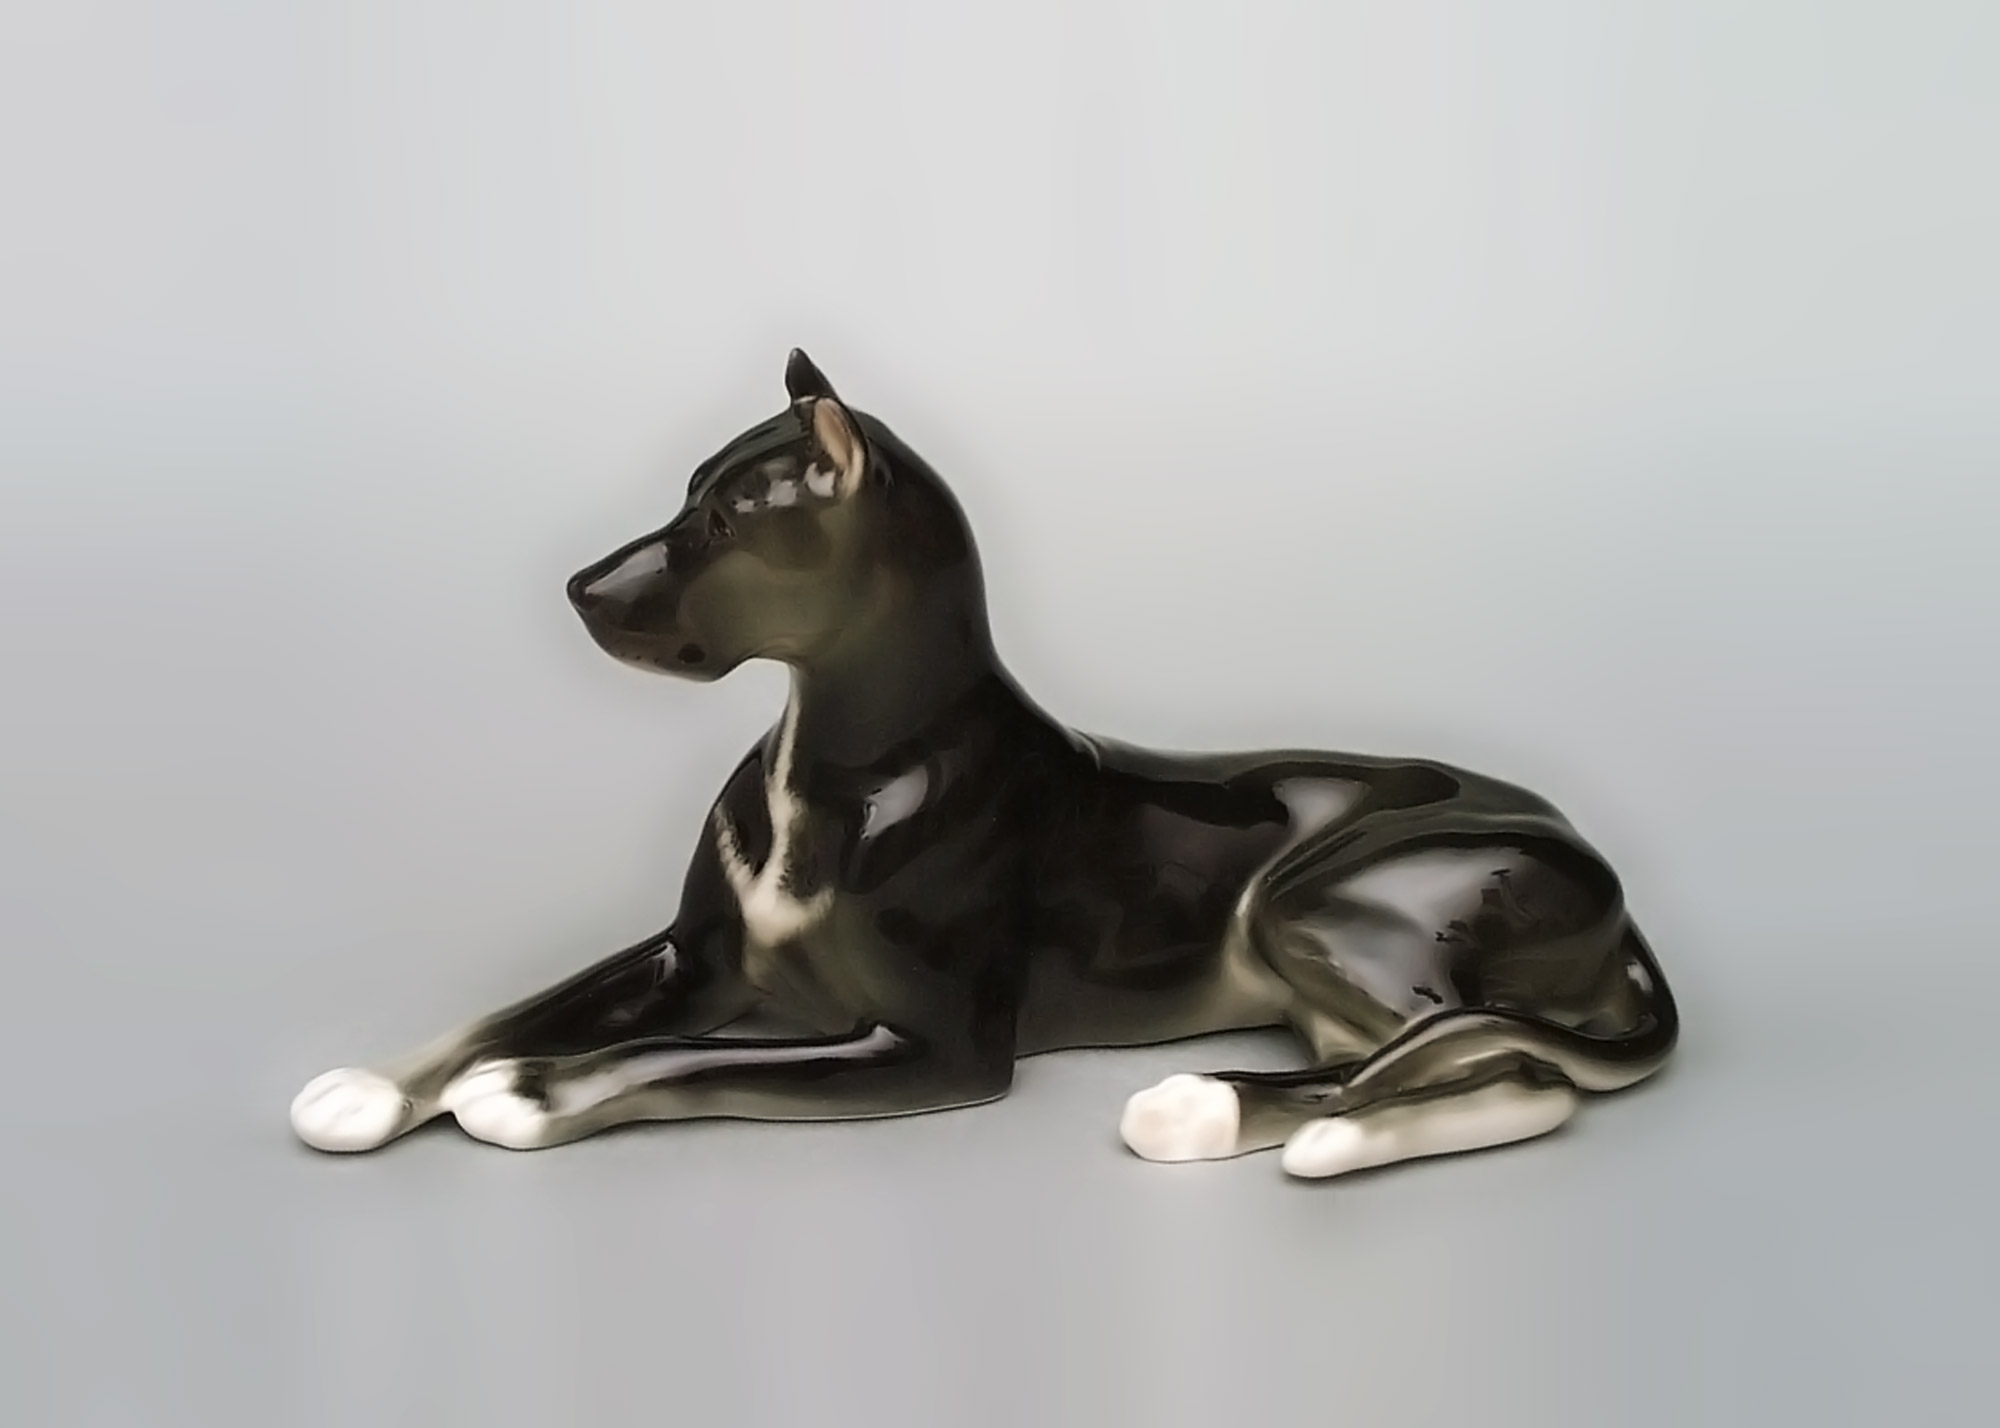 Buy Black Great Dane Dog Figurine at GoldenCockerel.com